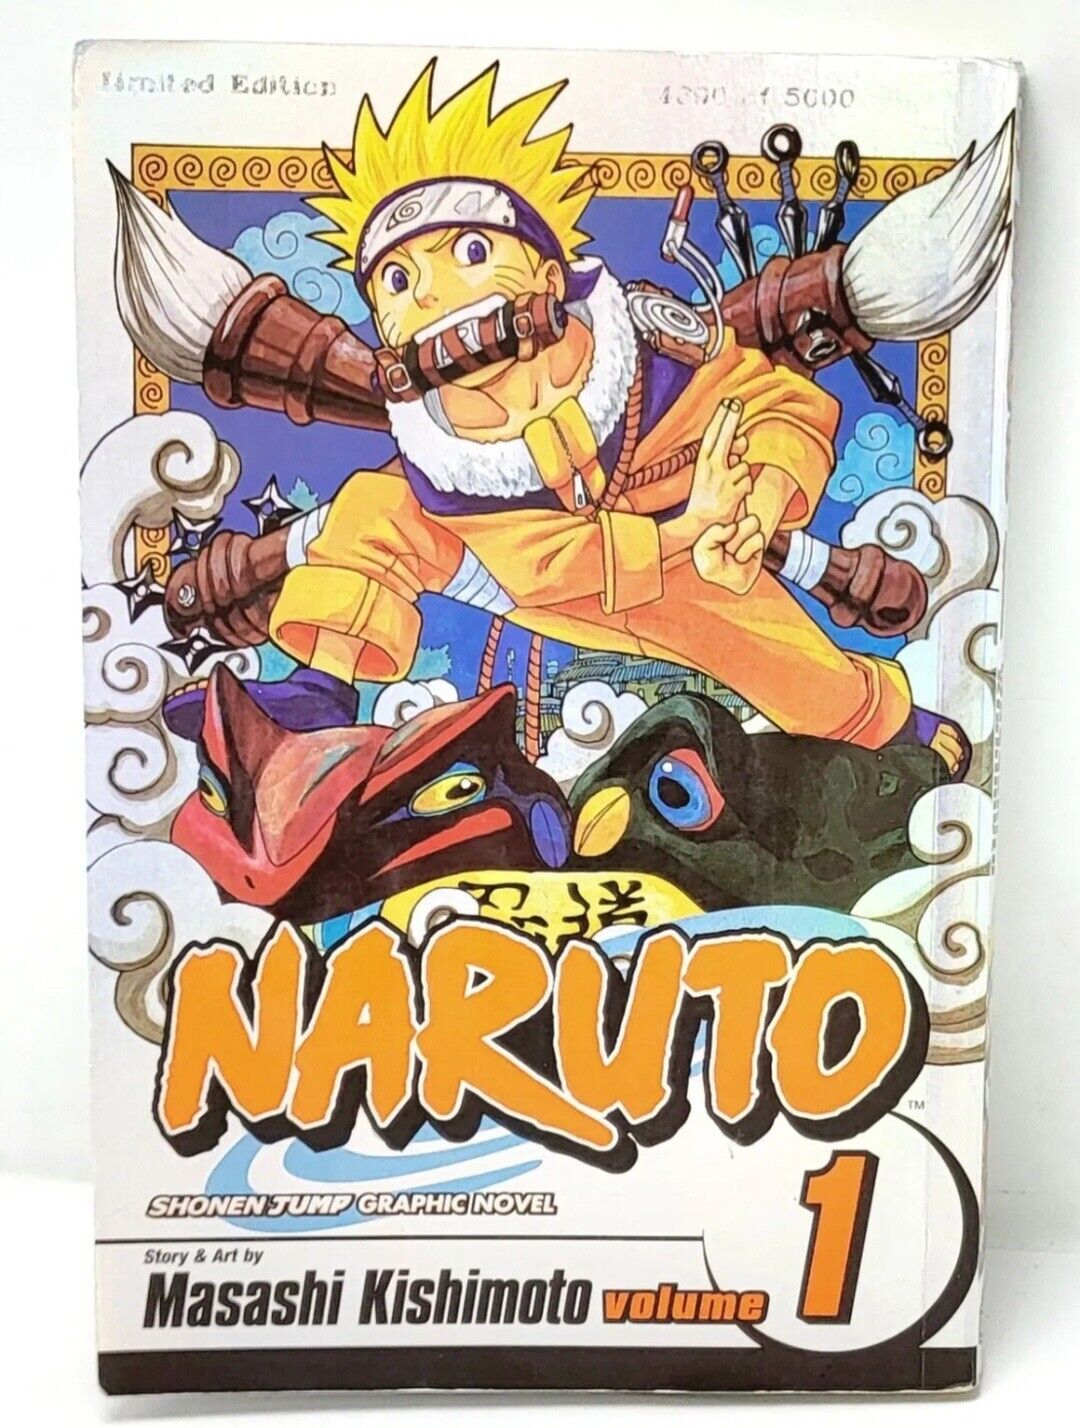 Naruto Vol.1 Limited Edition 2003 Manga (4390 of 5000) English Shiny Holo Cover